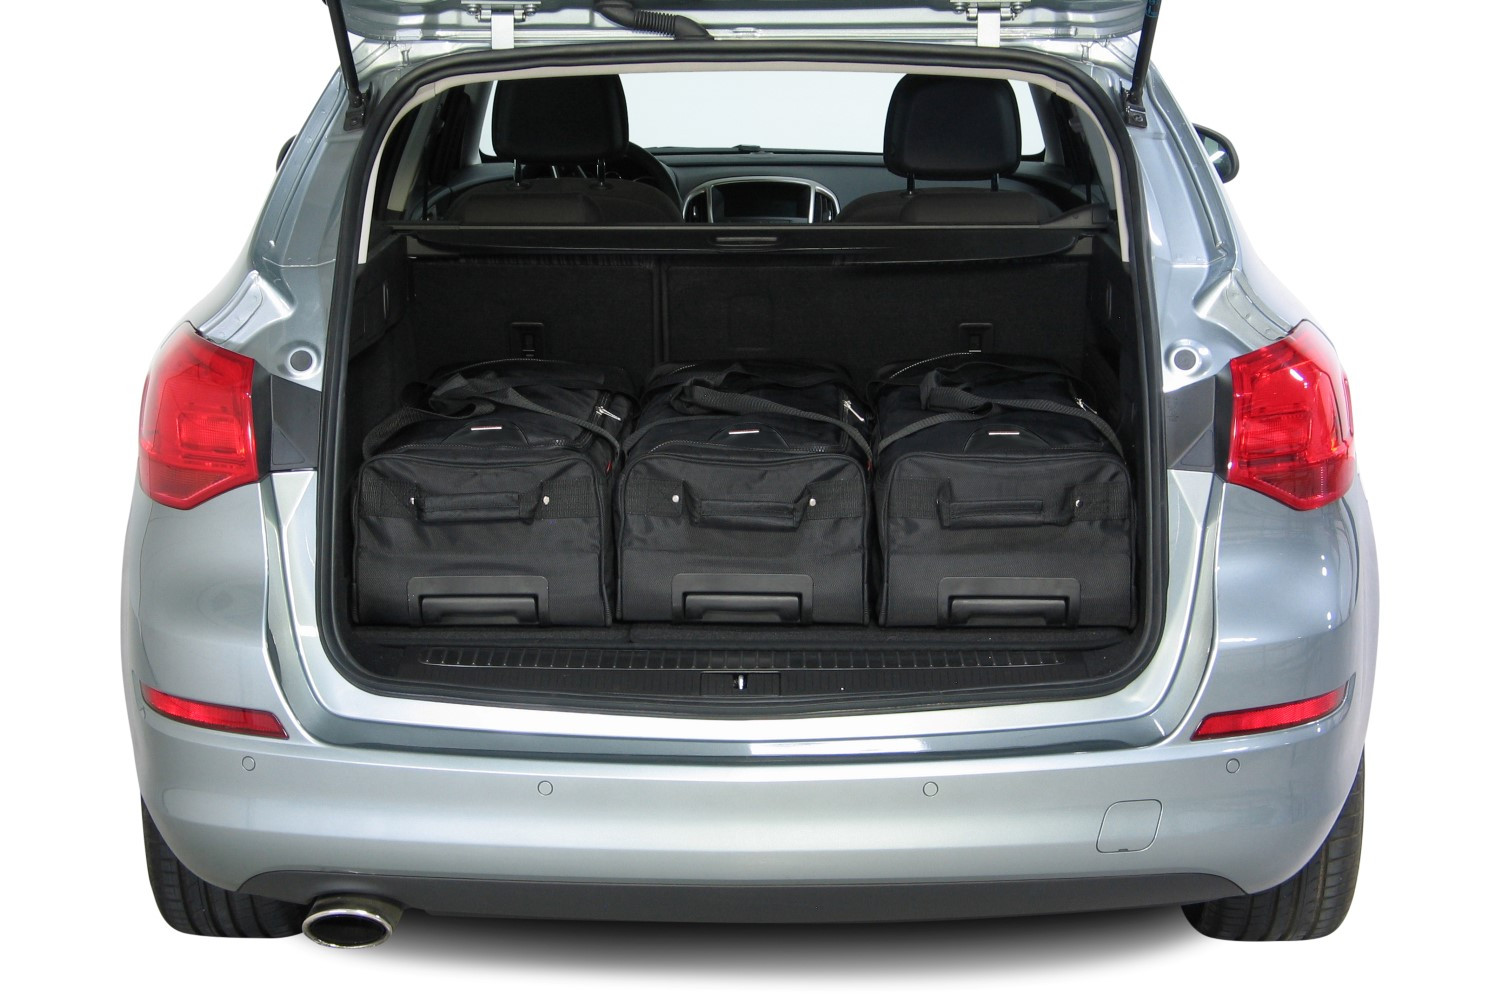 Opel Astra J Sports Tourer 2010-2016 Car-Bags travel bags